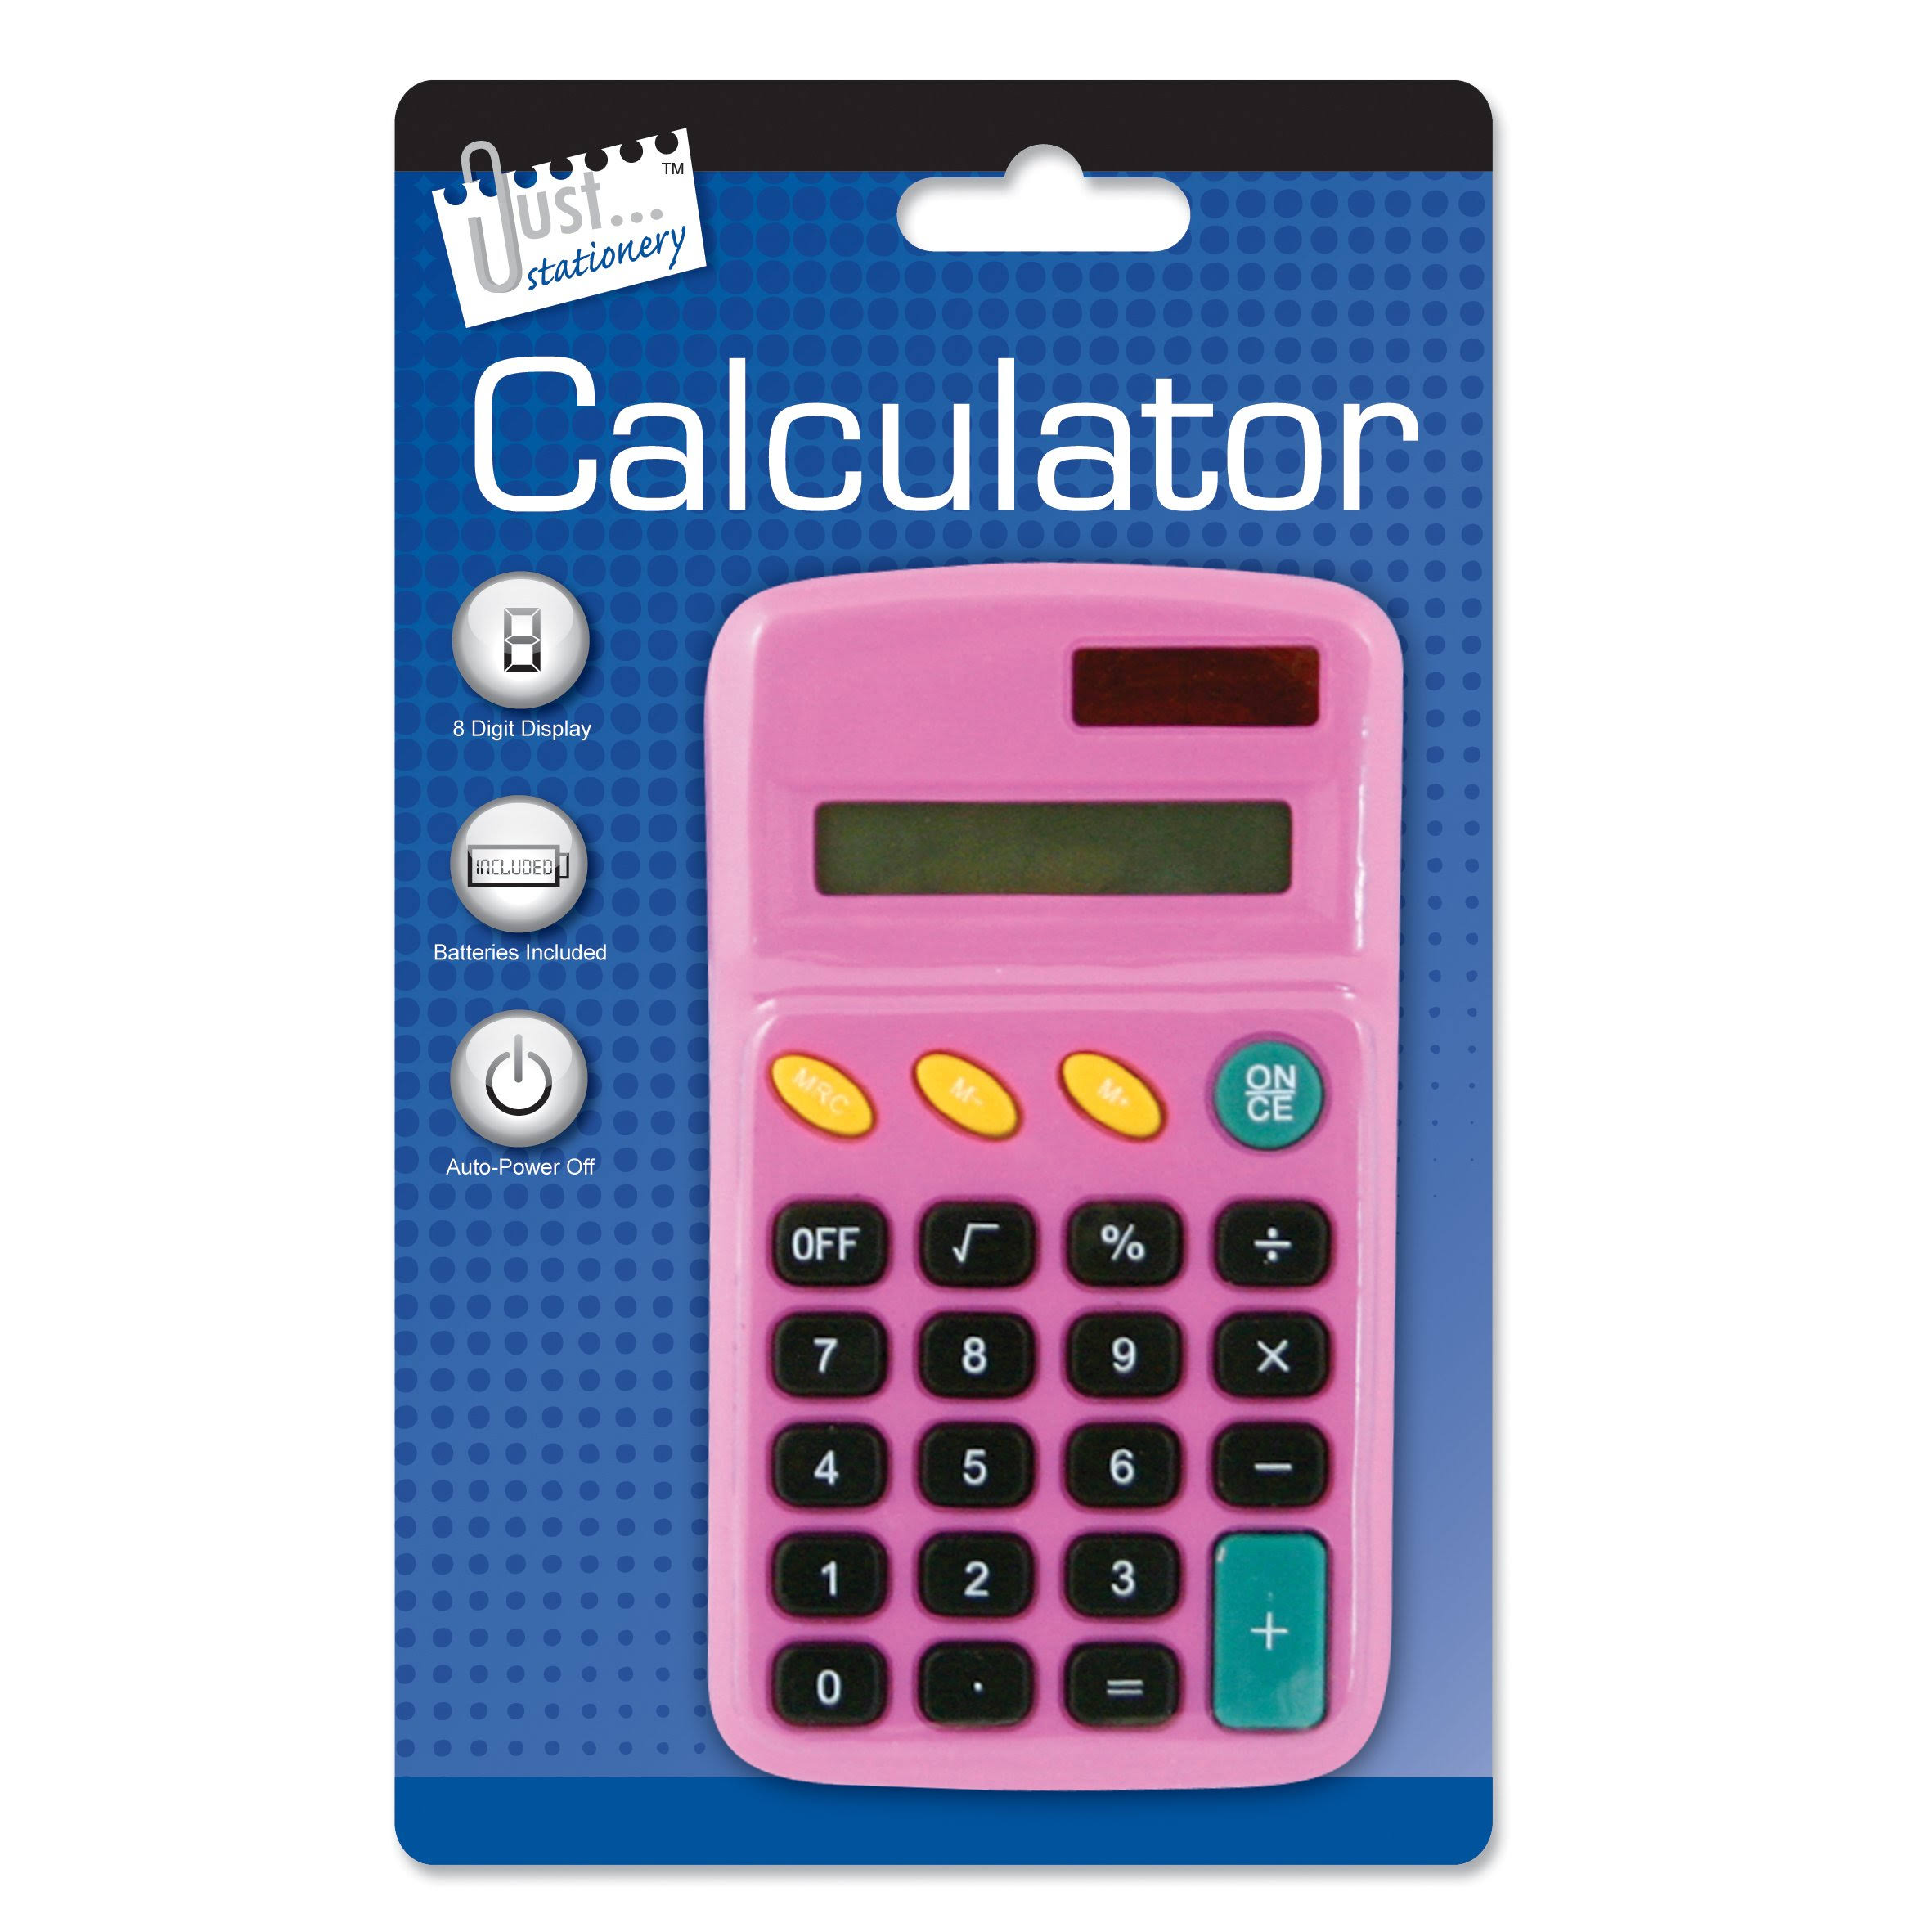 Just Stationery Pocket Calculator